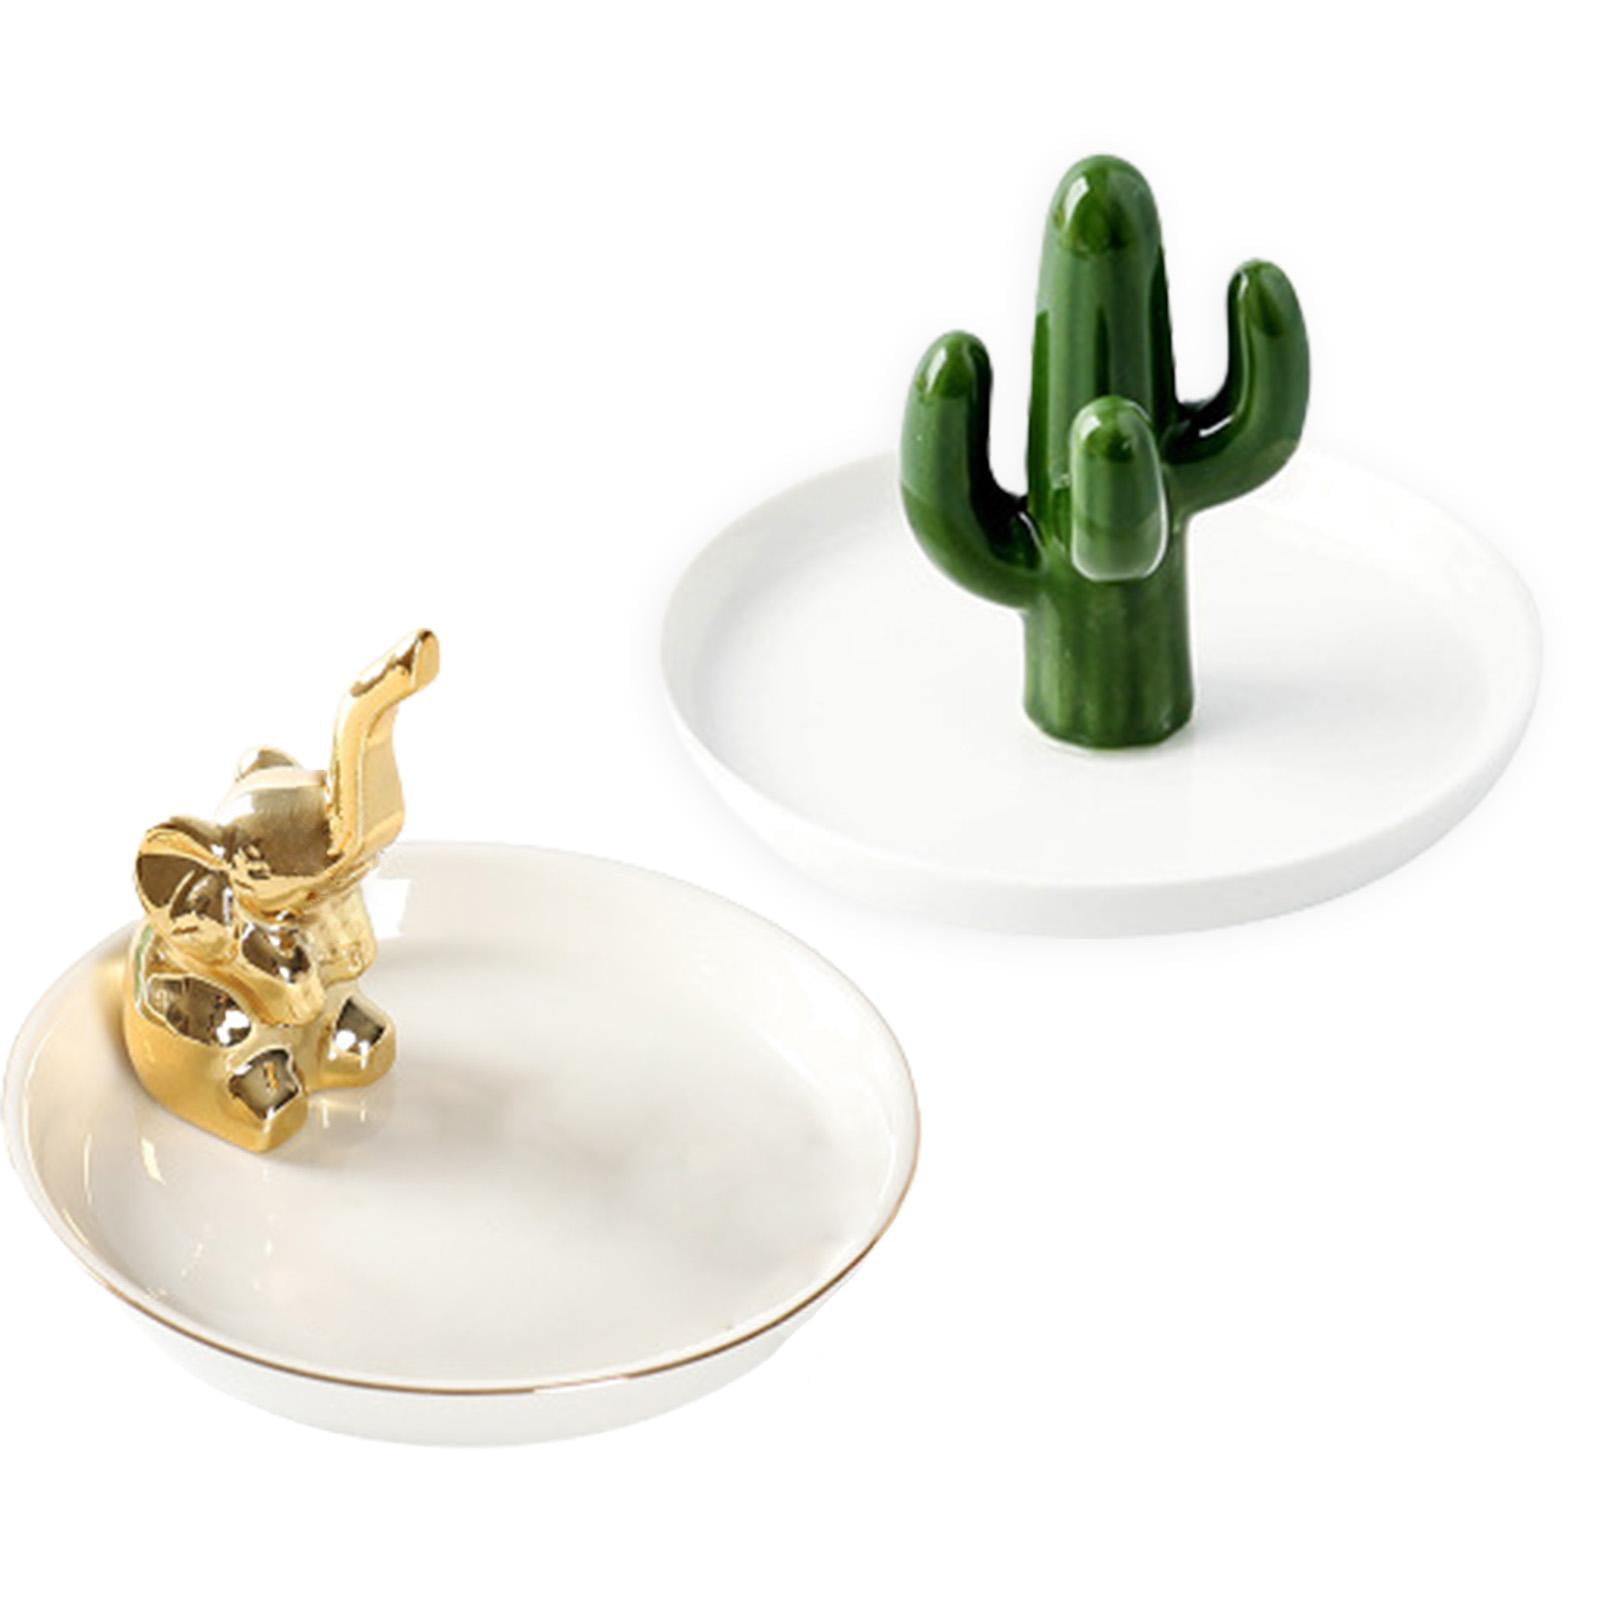 Hemoton Cactus Plates Ceramic Jewelry Plate Organizer Display for Home Decor Green 